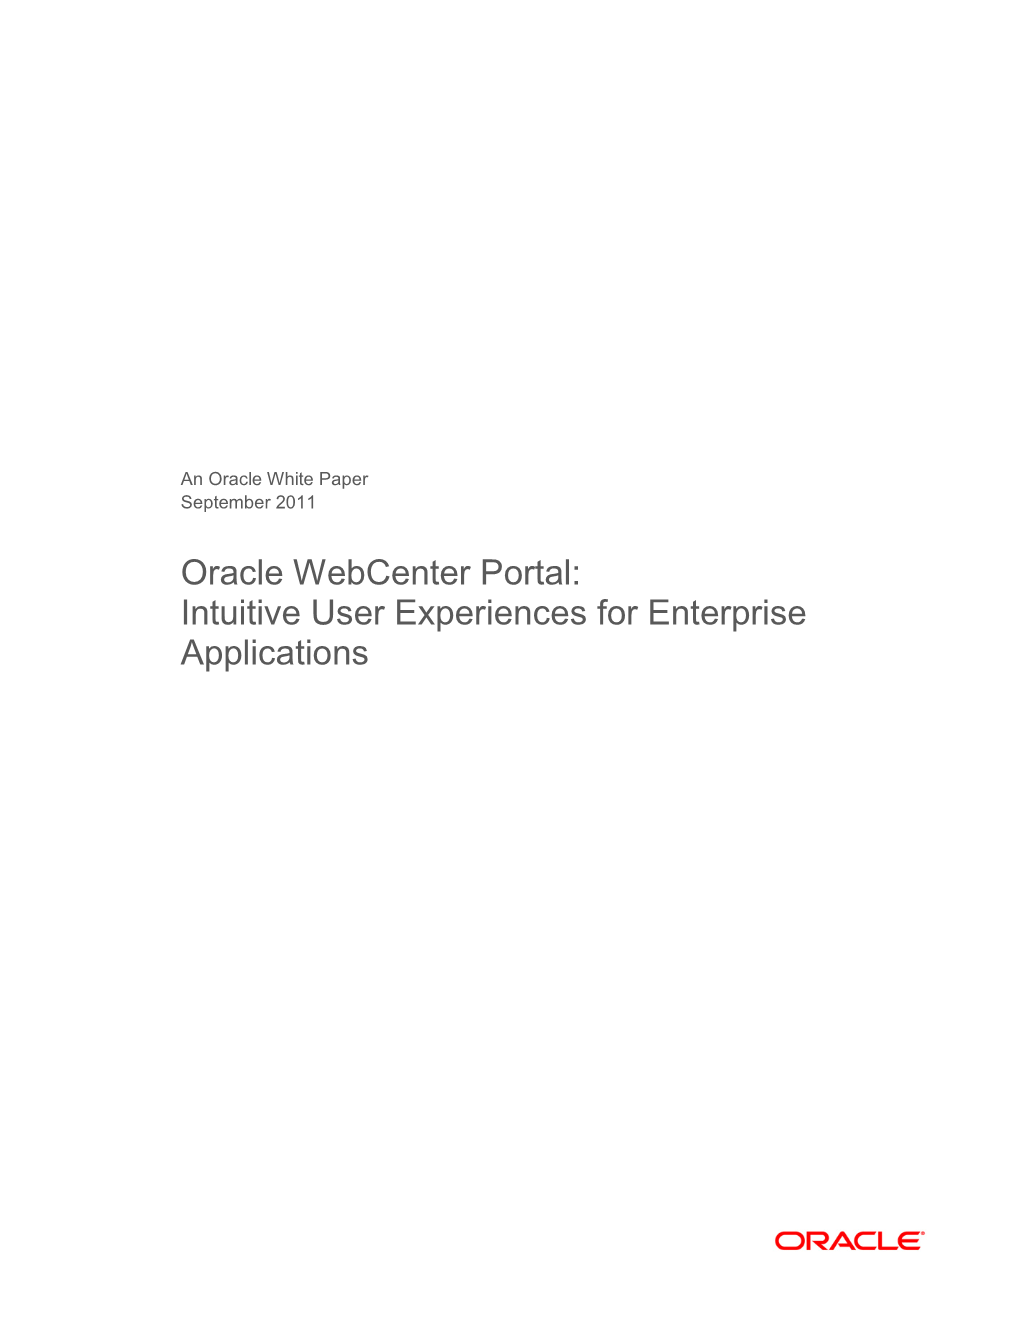 Oracle Webcenter Portal: Intuitive User Experiences for Enterprise Applications